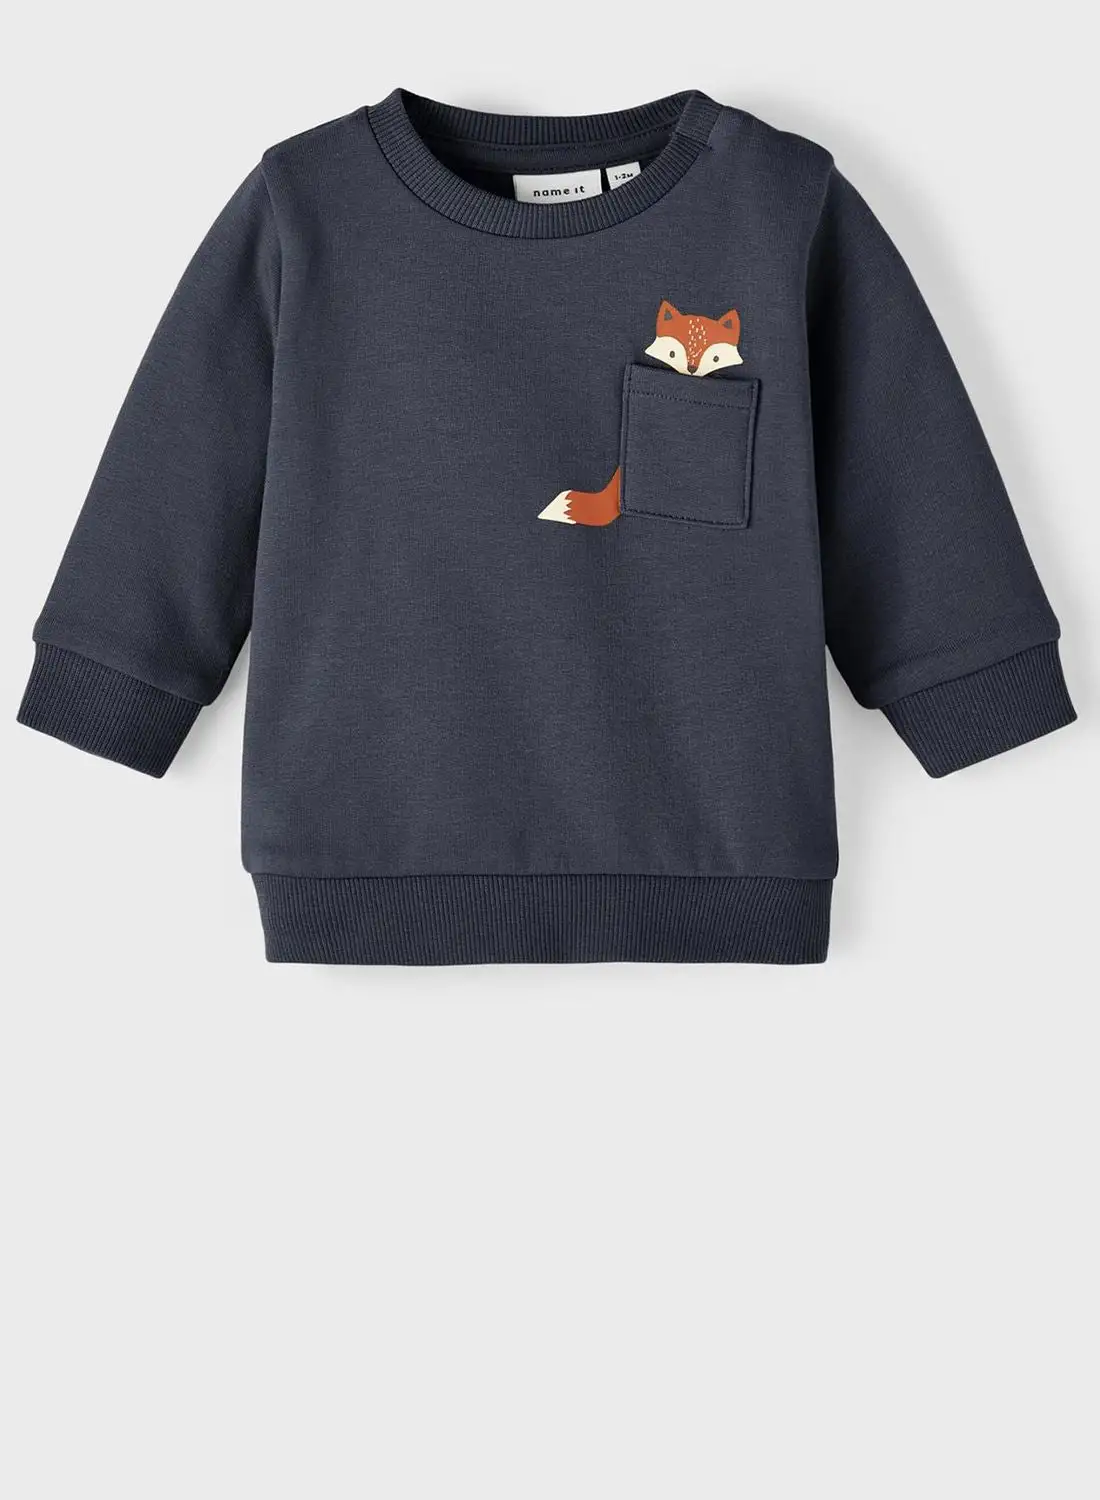 NAME IT Kids Fox Print Sweatshirt